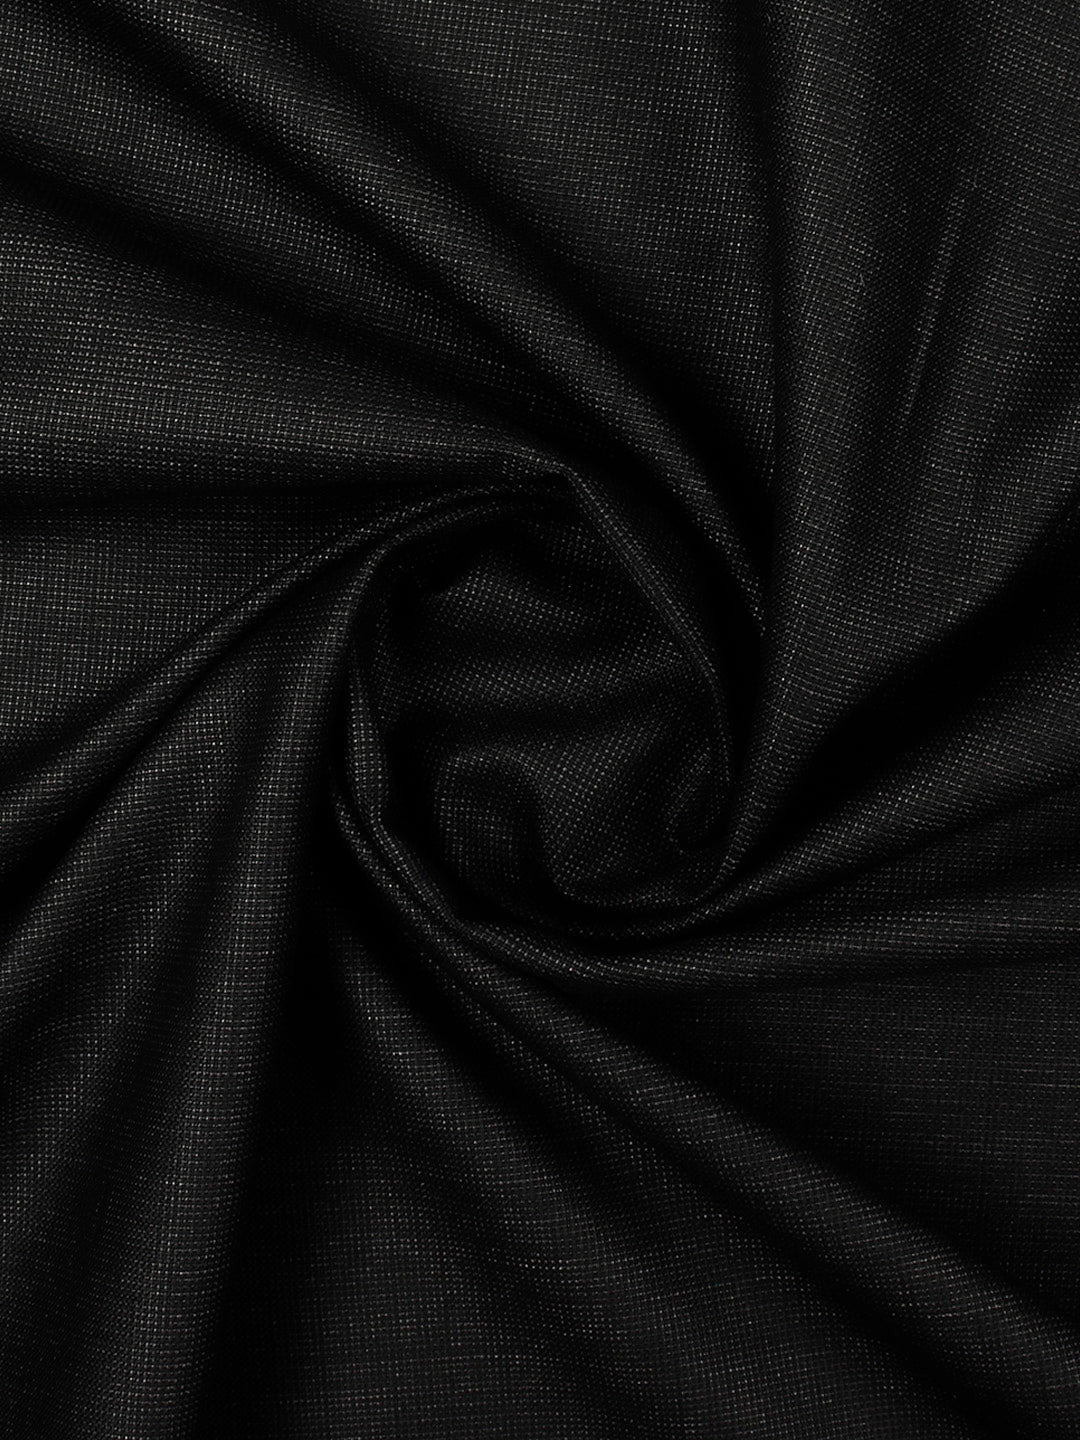 Cotton Blended Black Colour Plain Pants Fabric Jolly Days